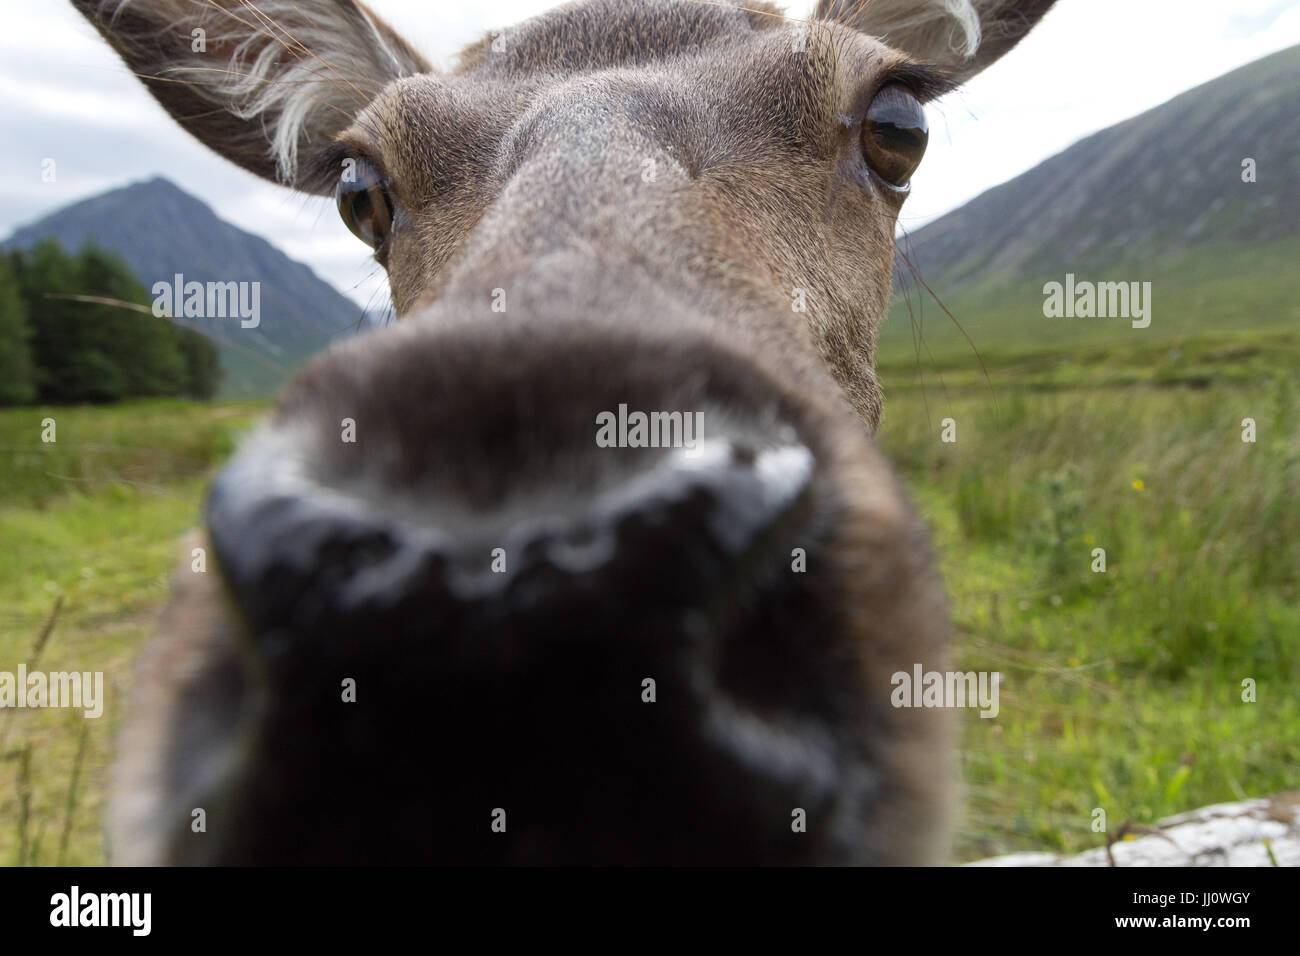 A curious female deer coming close to camera Stock Photo